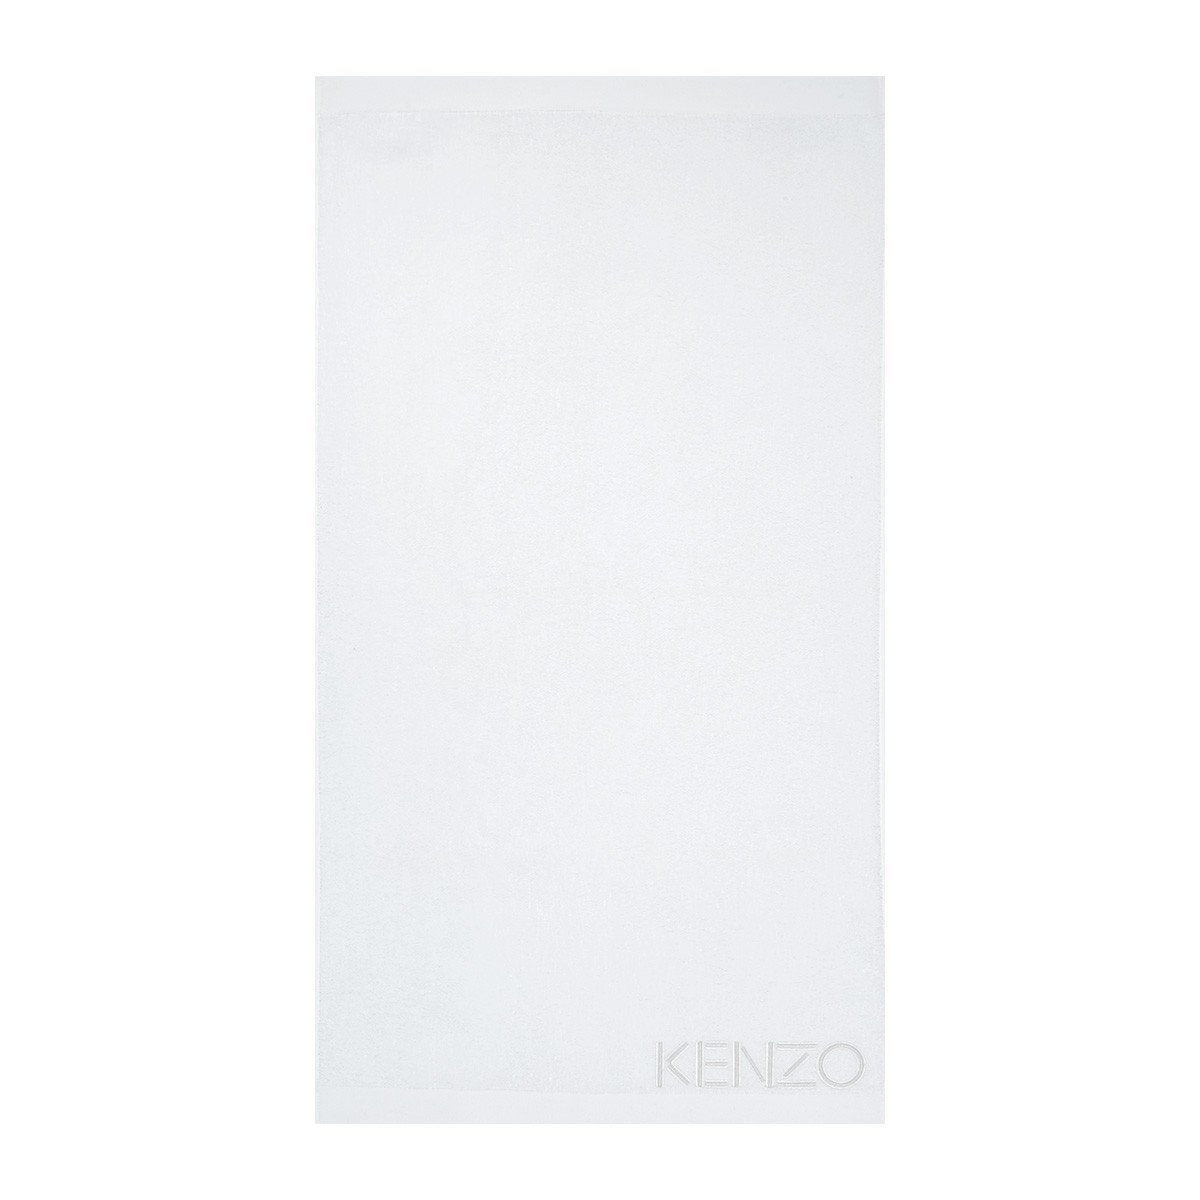 Iconic White Bath Sheet by Kenzo | Fig Linens